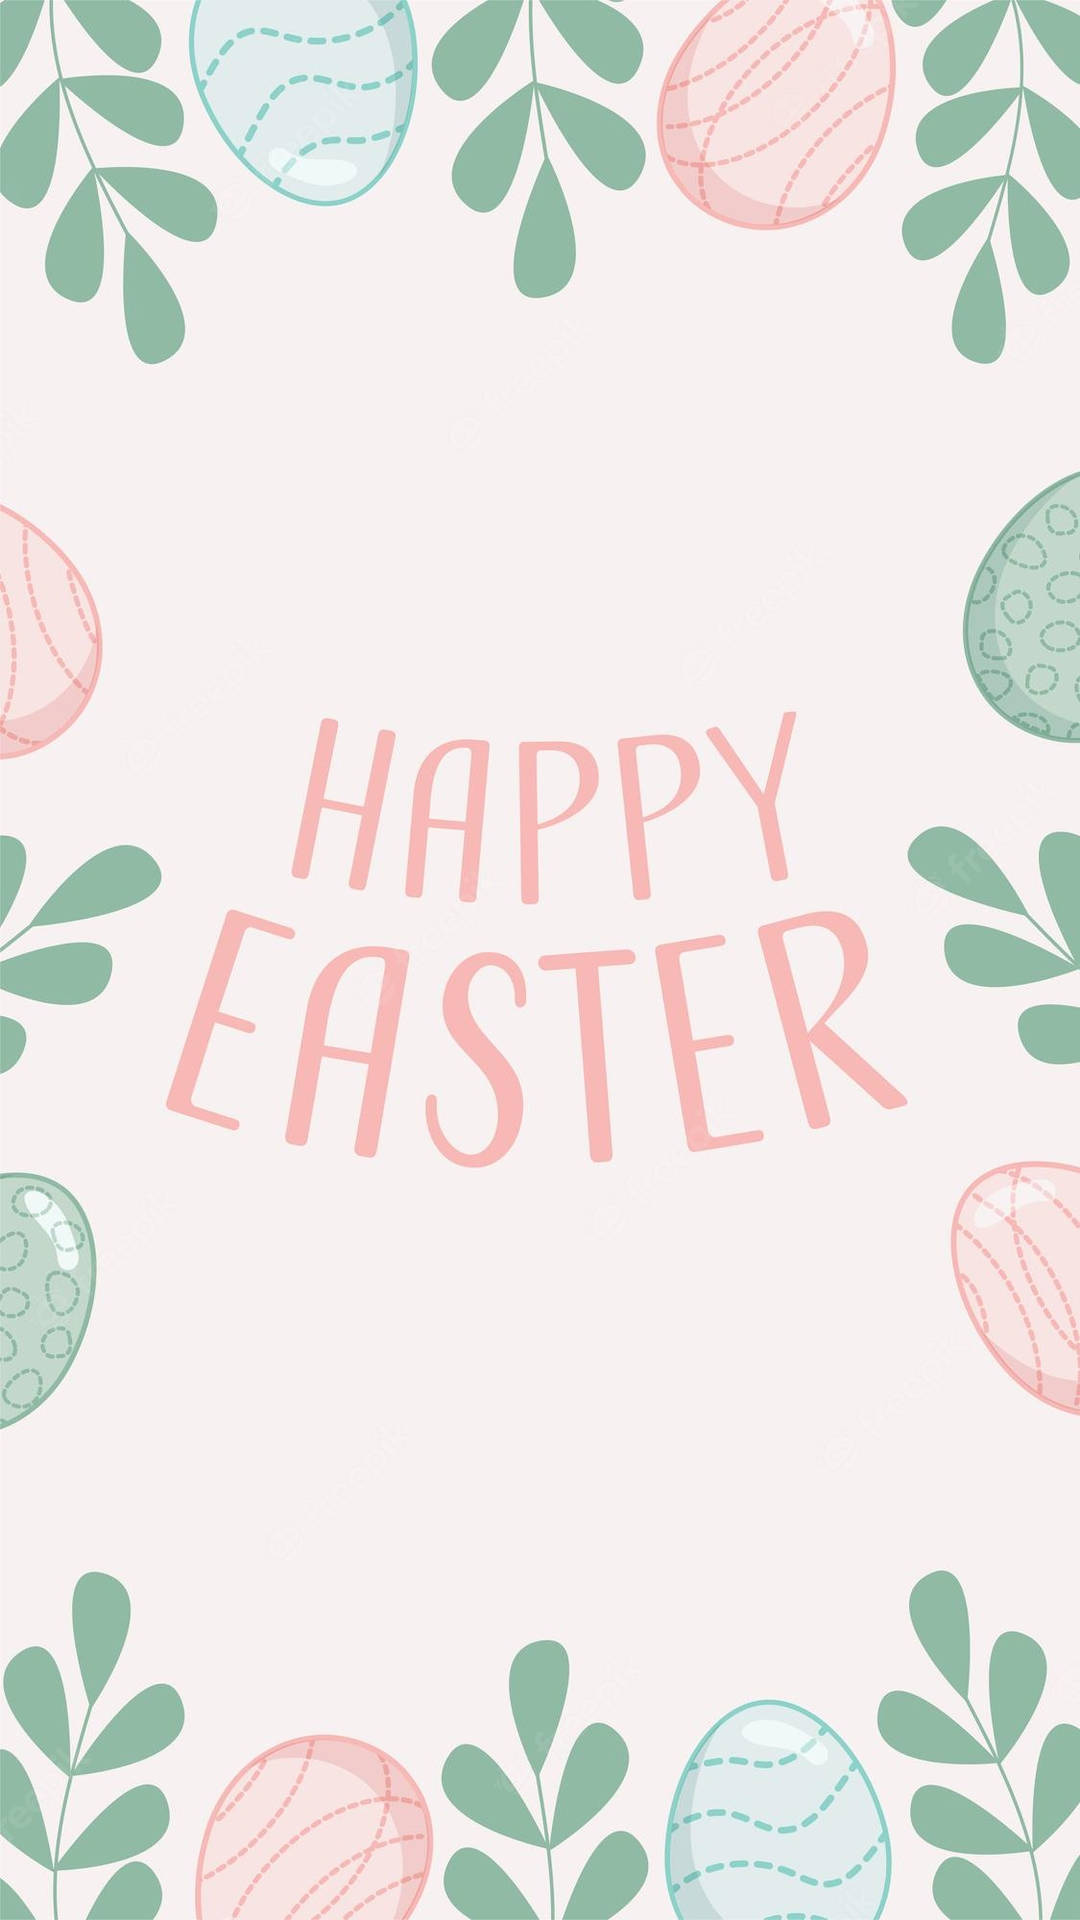 Celebrate Easter&Spread Joy Through Your Phone Wallpaper